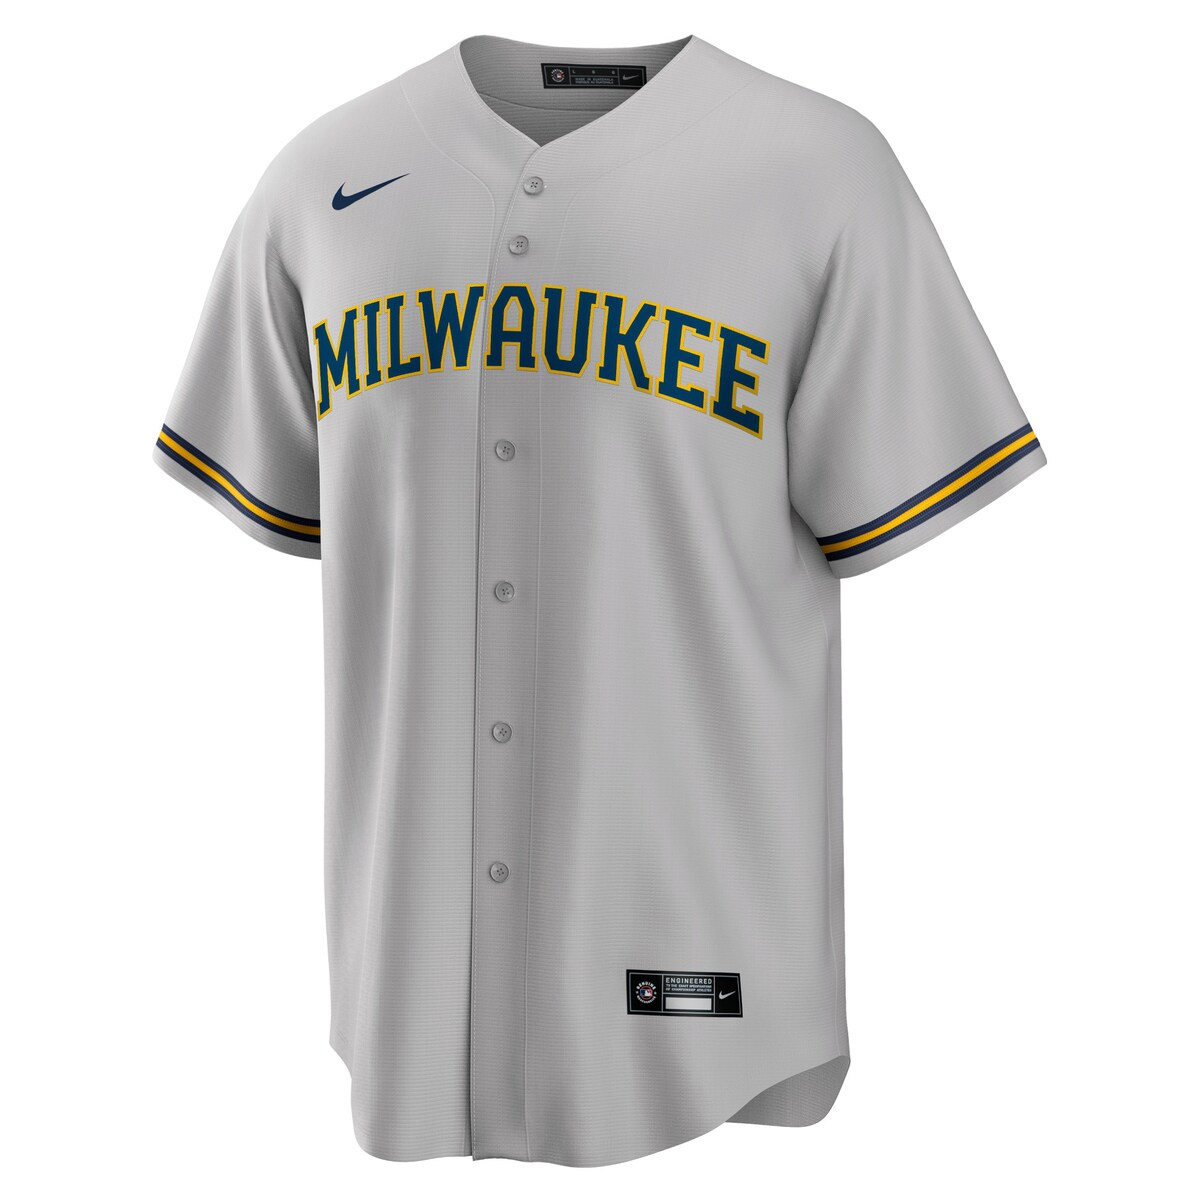 New MLB 2020 Nike Authentic Jersey Milwaukee Brewers Alternate